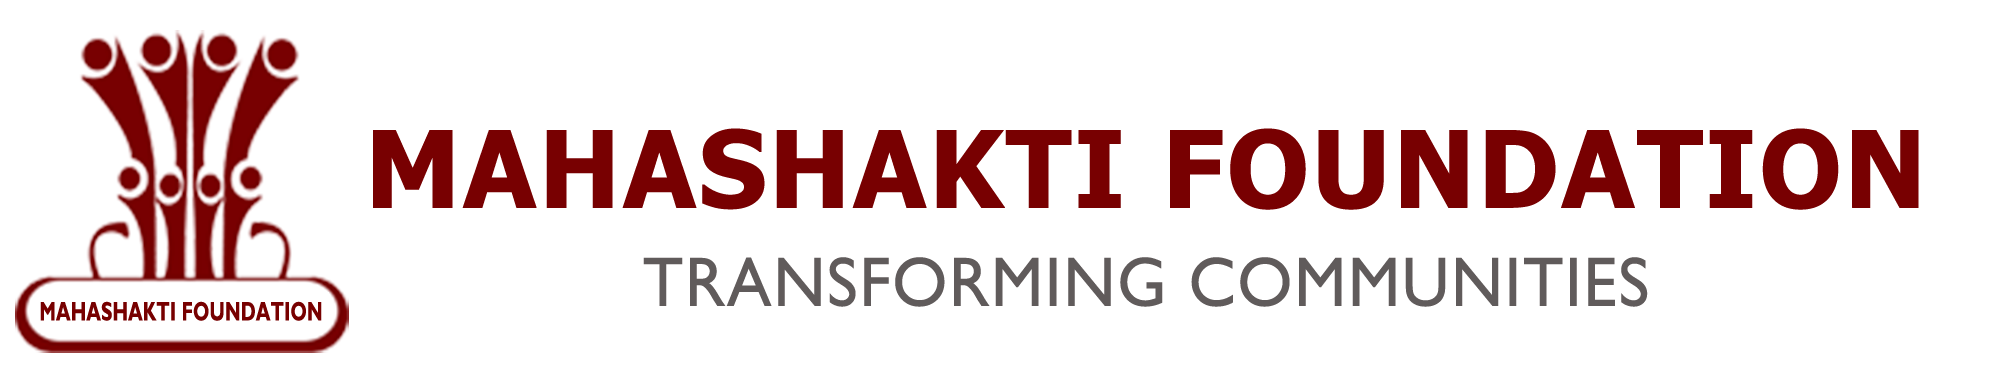 Mahashakti Foundation